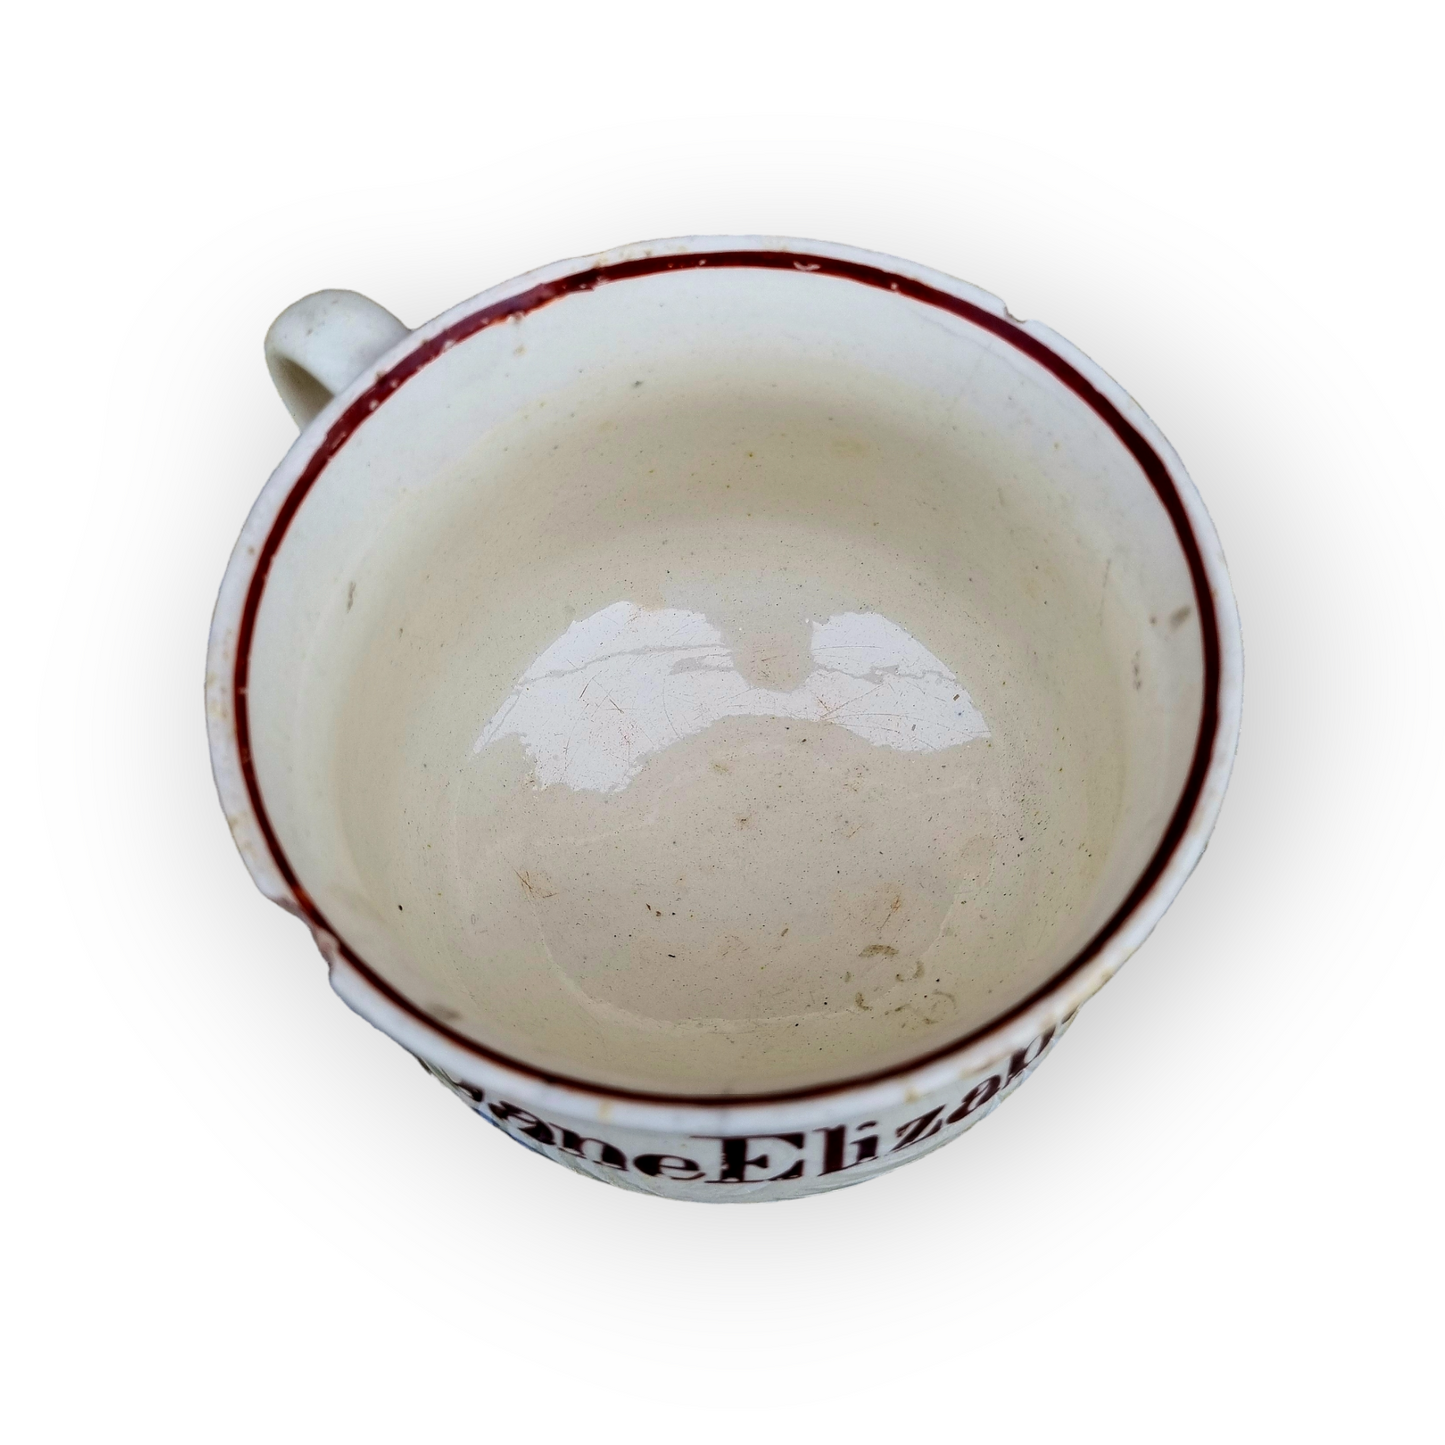 Diminutive Late 18th Century English Antique Creamware Child's Piss Pot / Chamber Pot Inscribed "Jane Elizabeth Skinner"